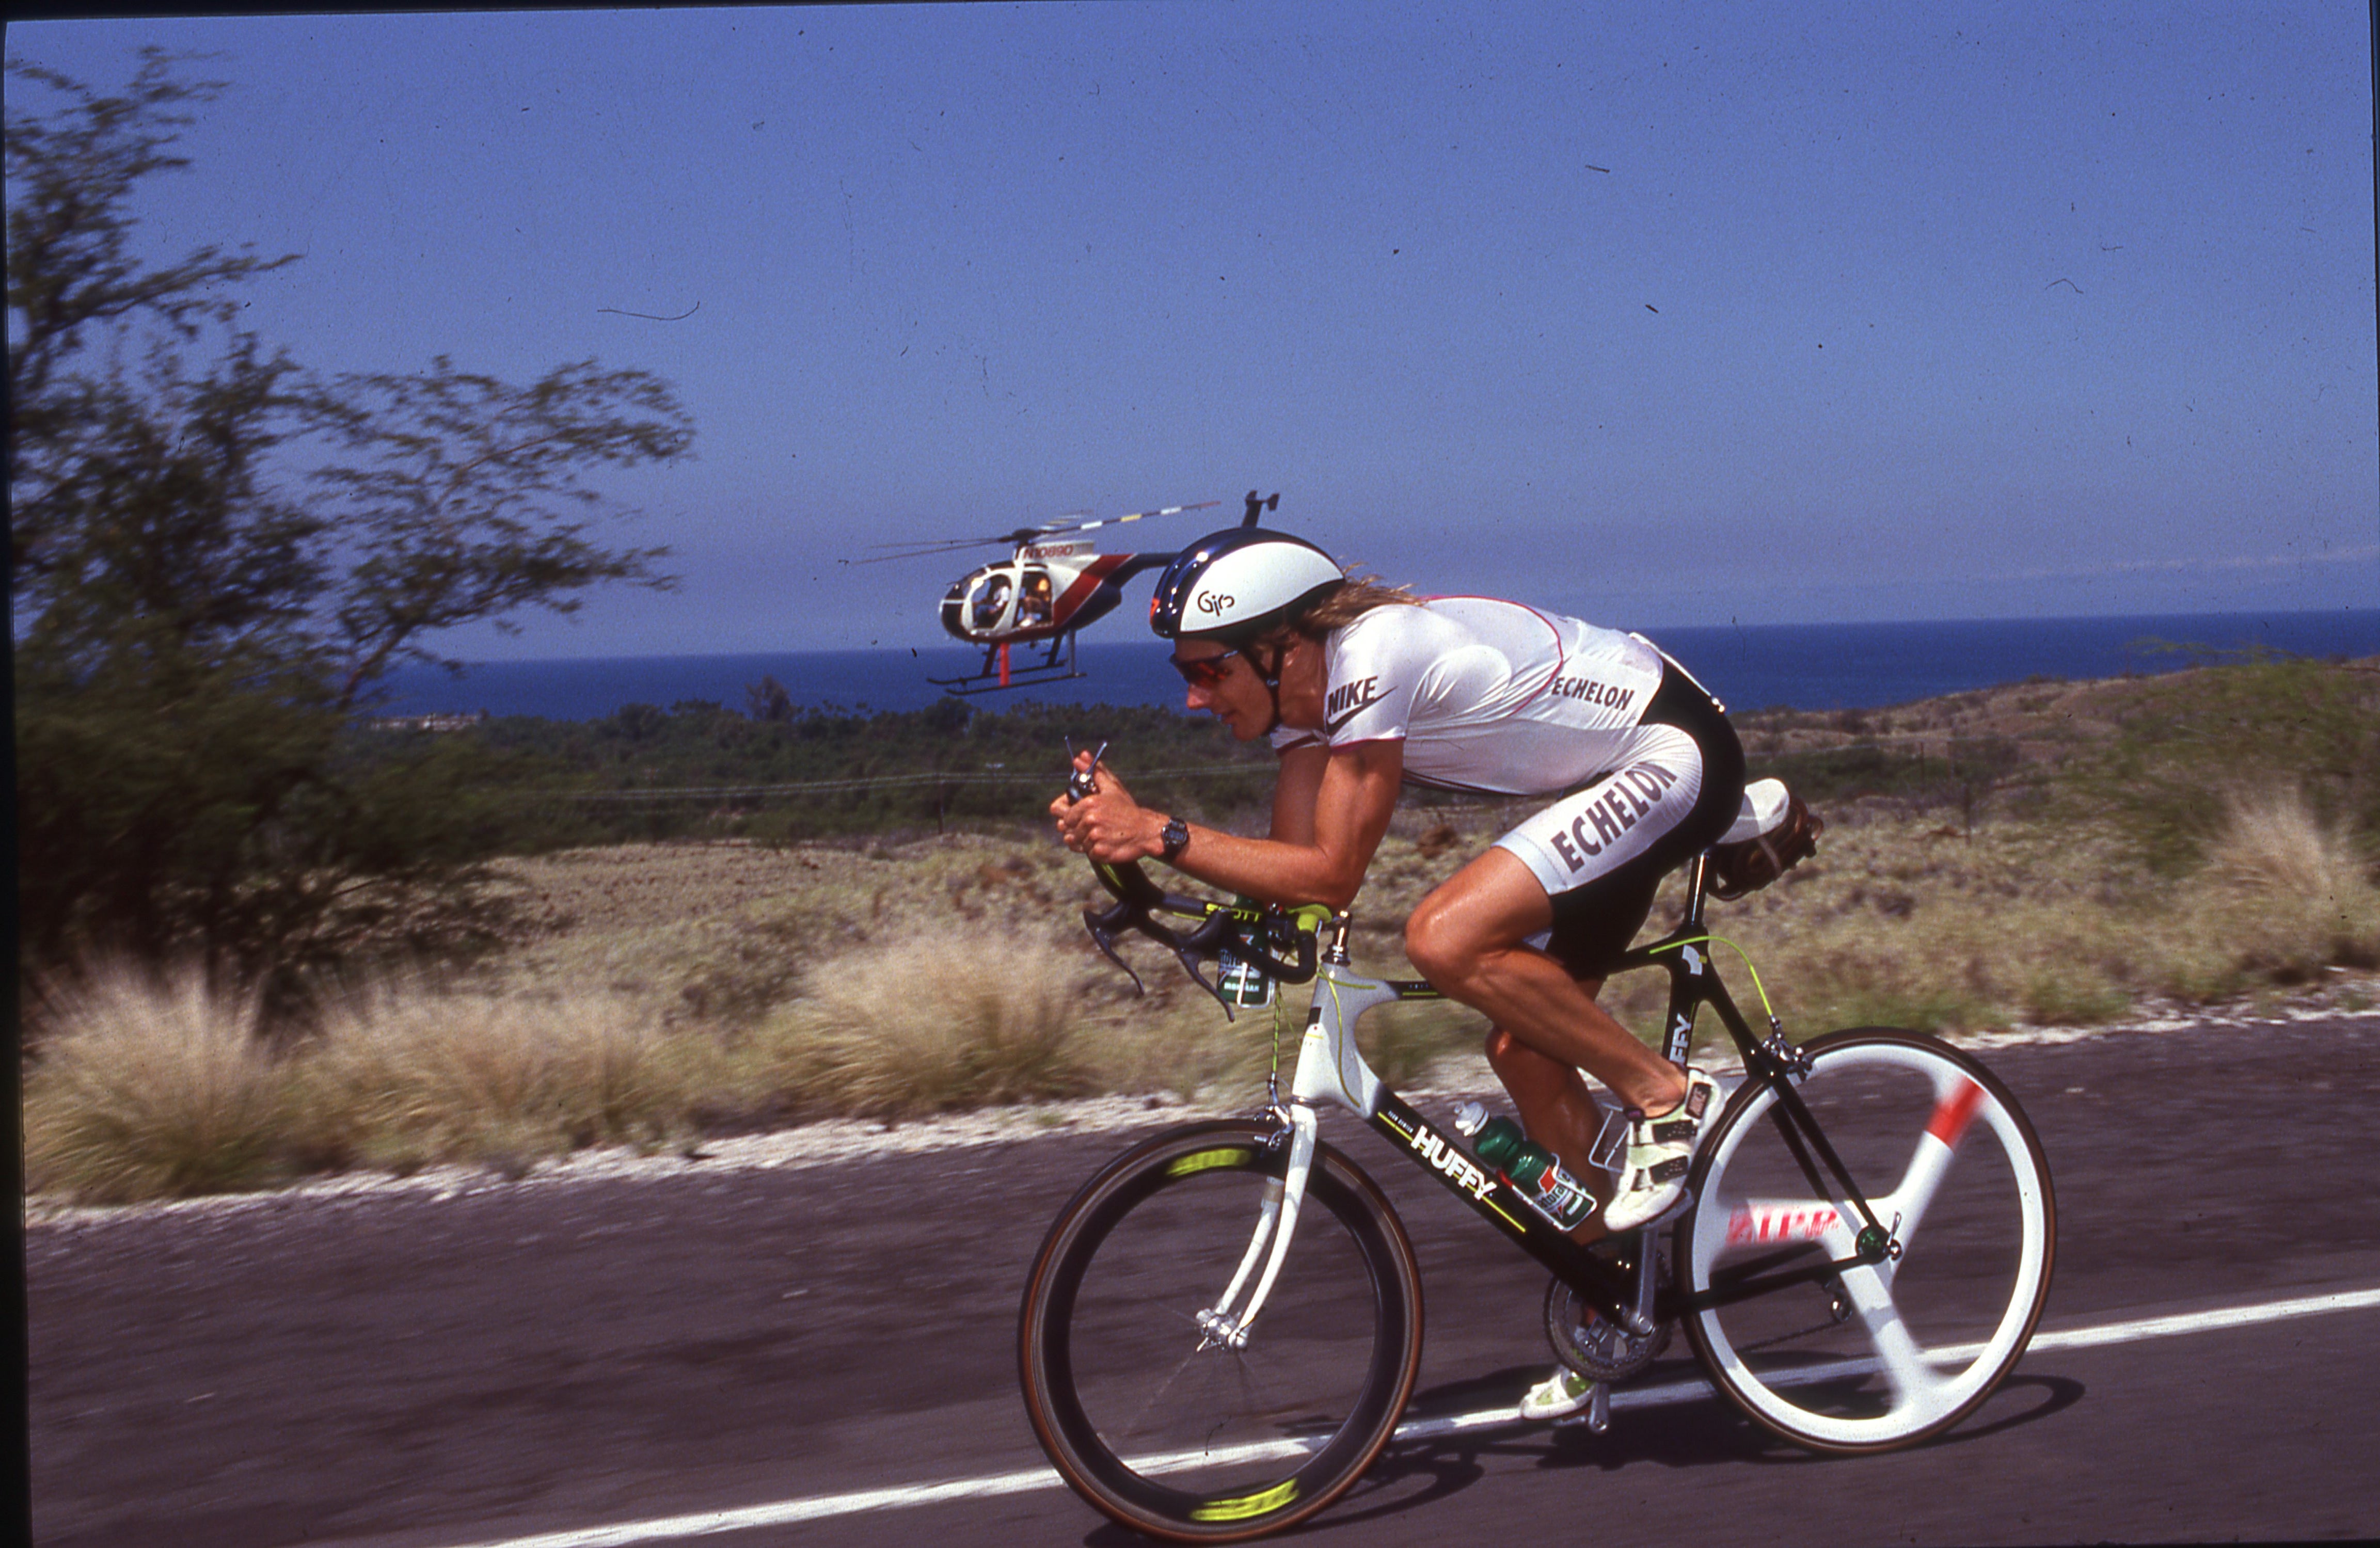 Mark Allen Ironman Champion at Ironman World Championship 1991